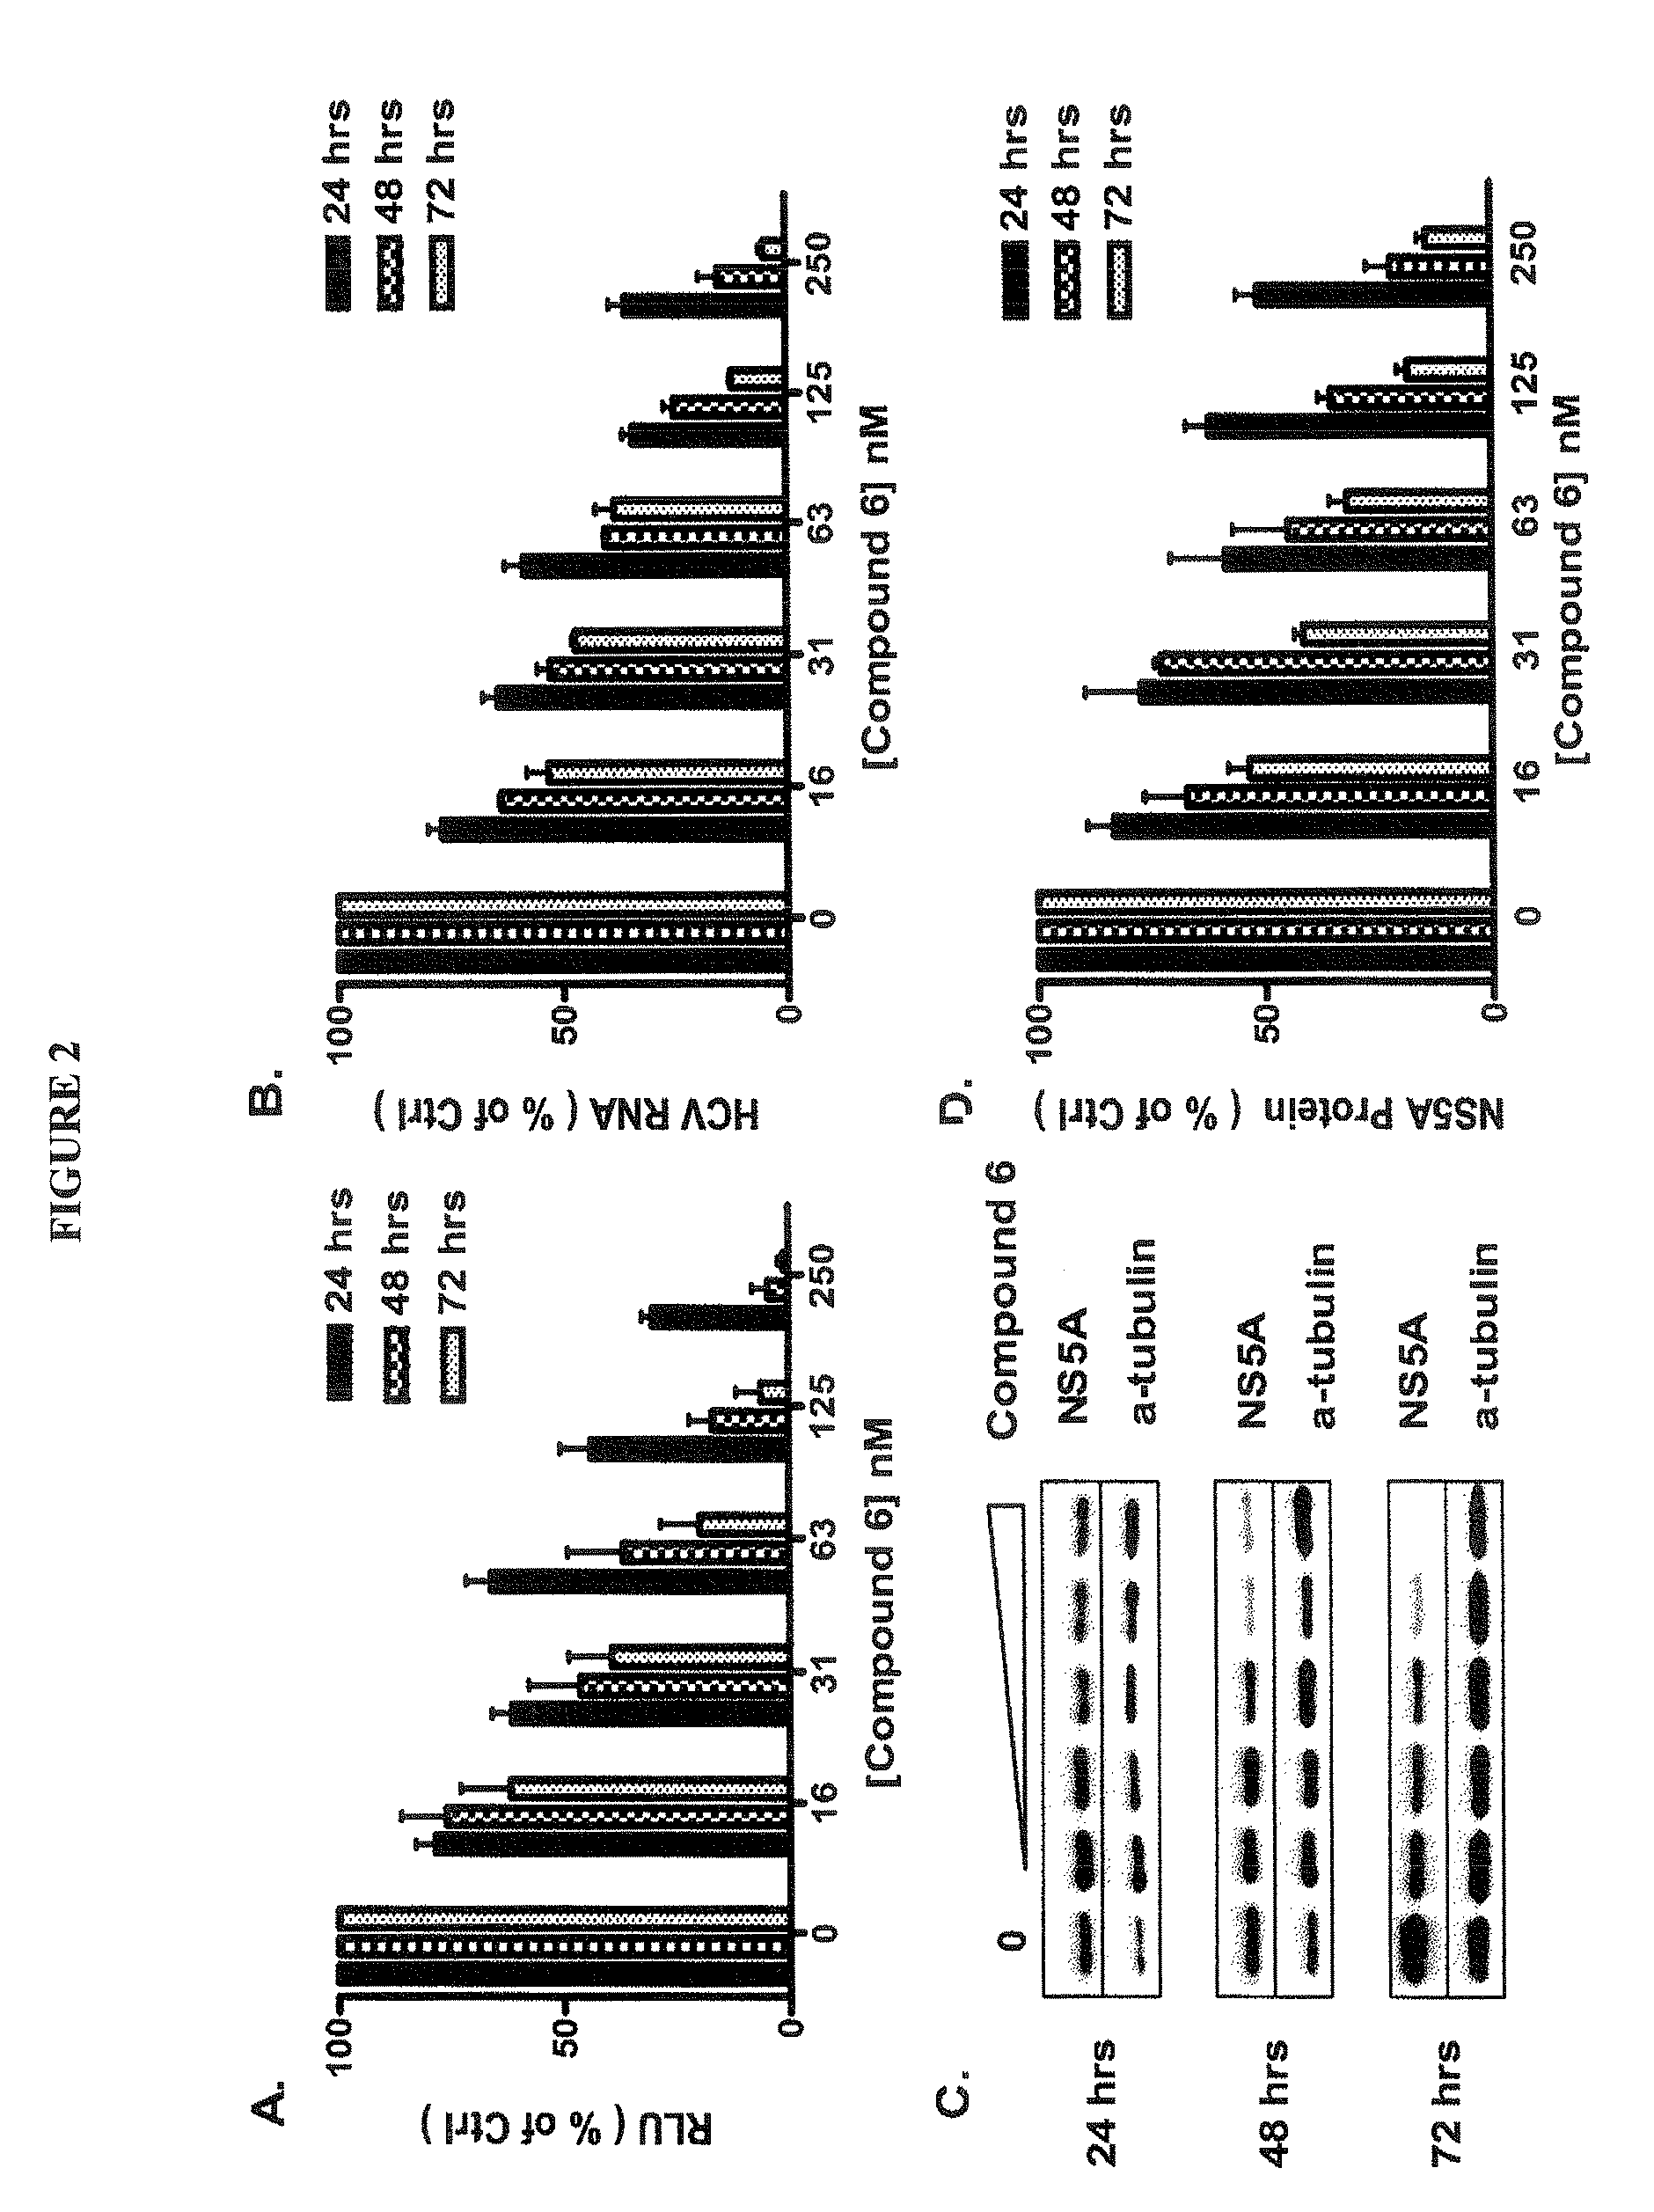 Anti-hepatitis c activity of meso-tetrakis-porphyrin analogues